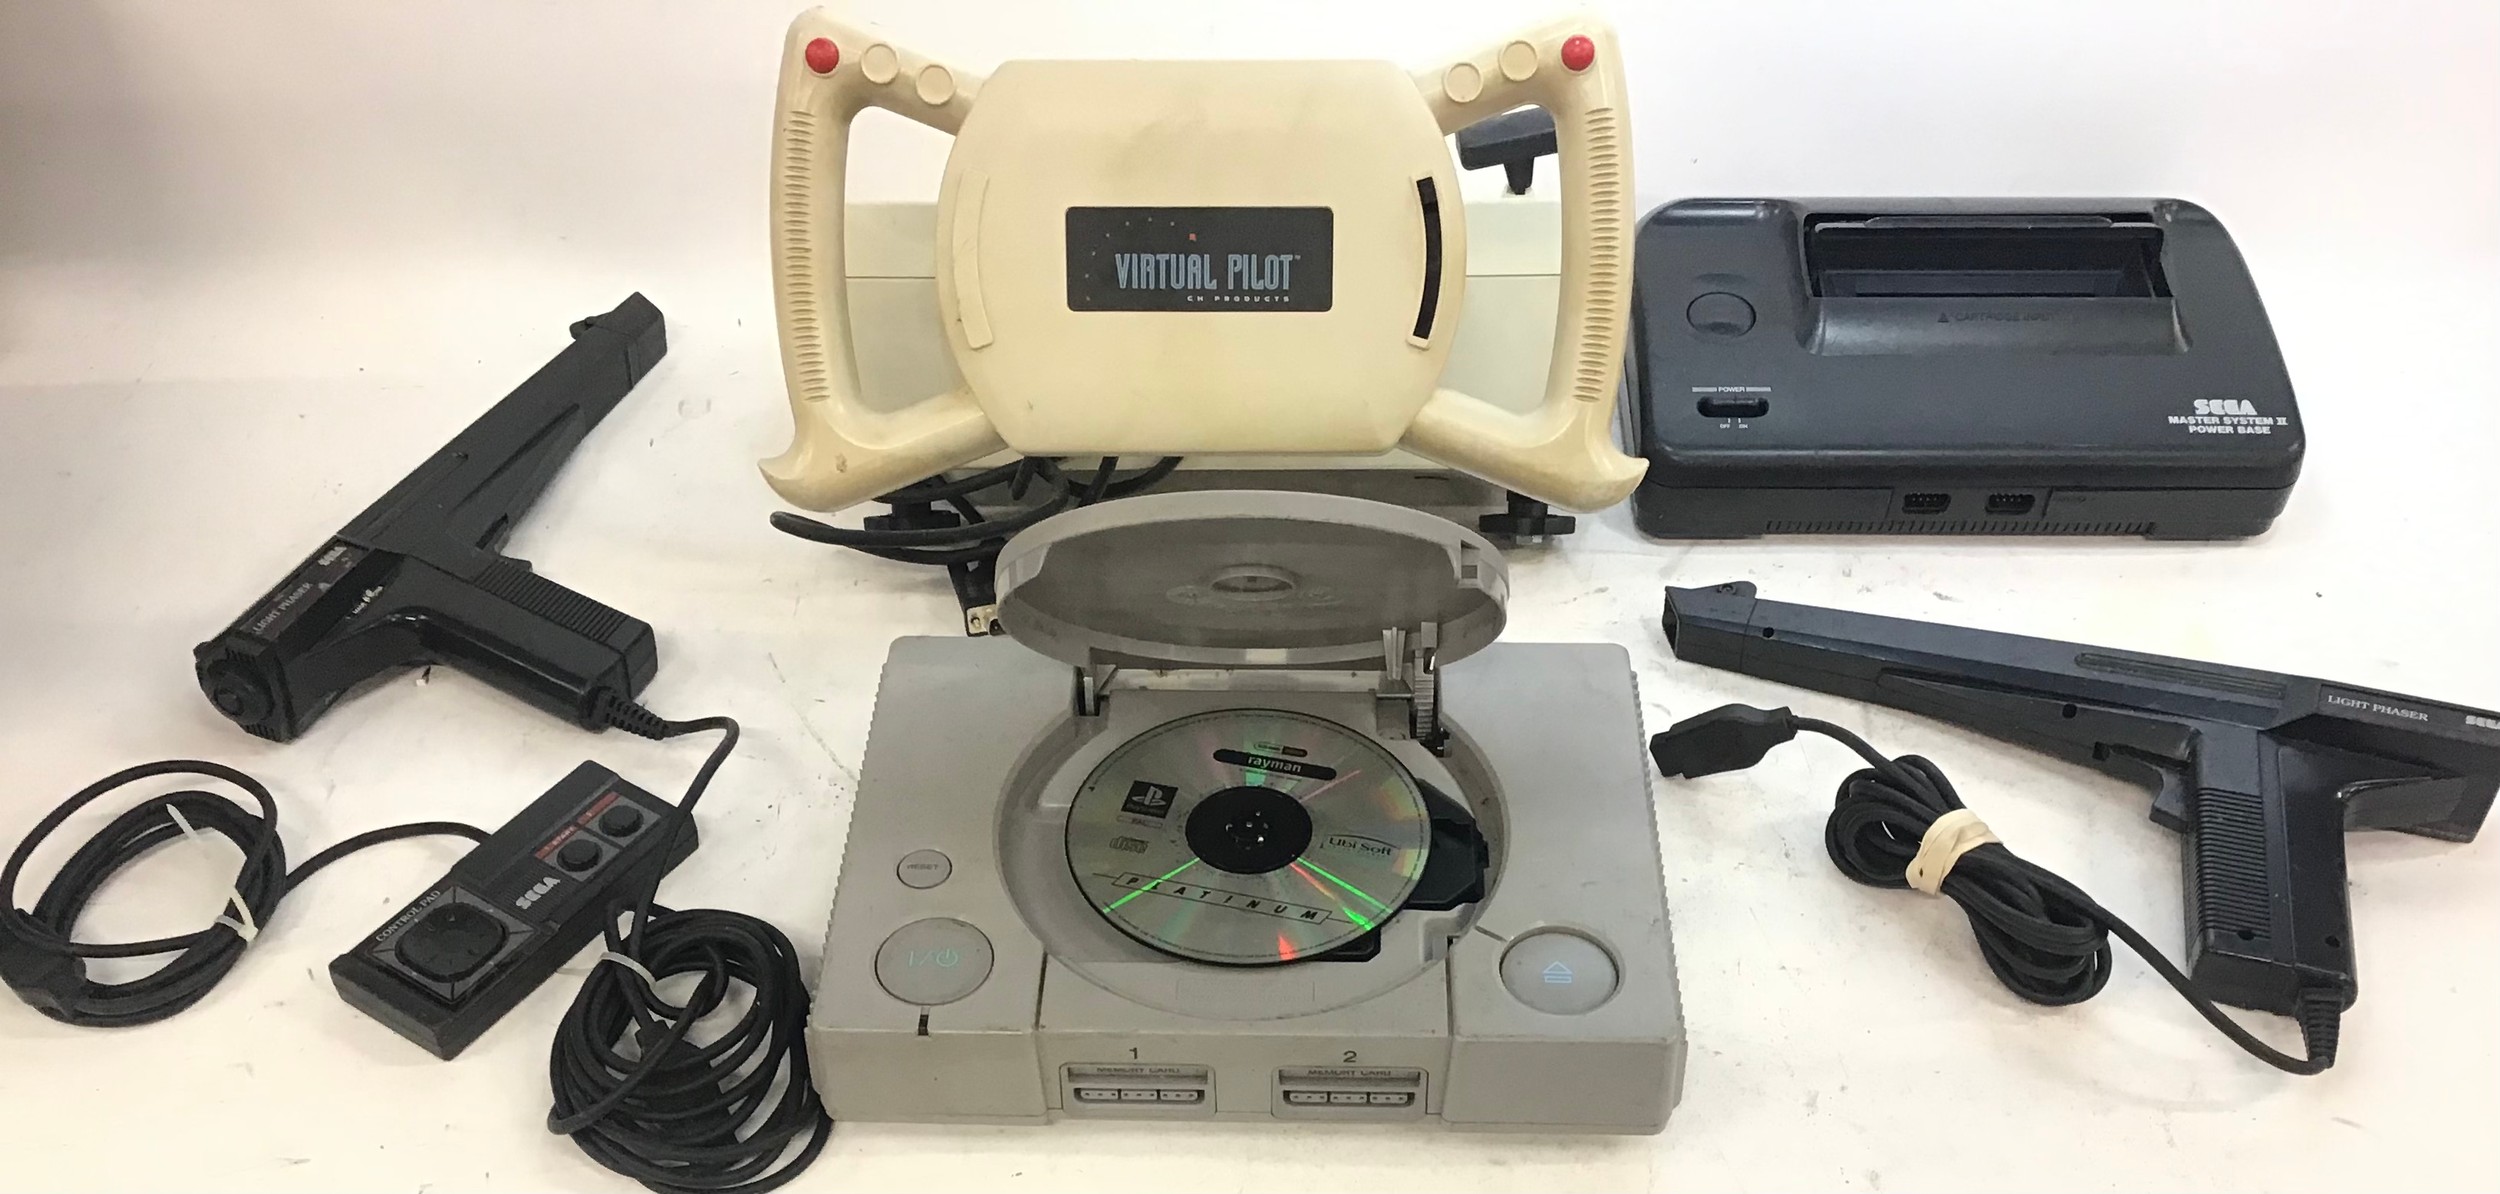 Gamers lot to include a Virtual Pilot Simulator Yoke / joystick, Sega Master System with 2 light